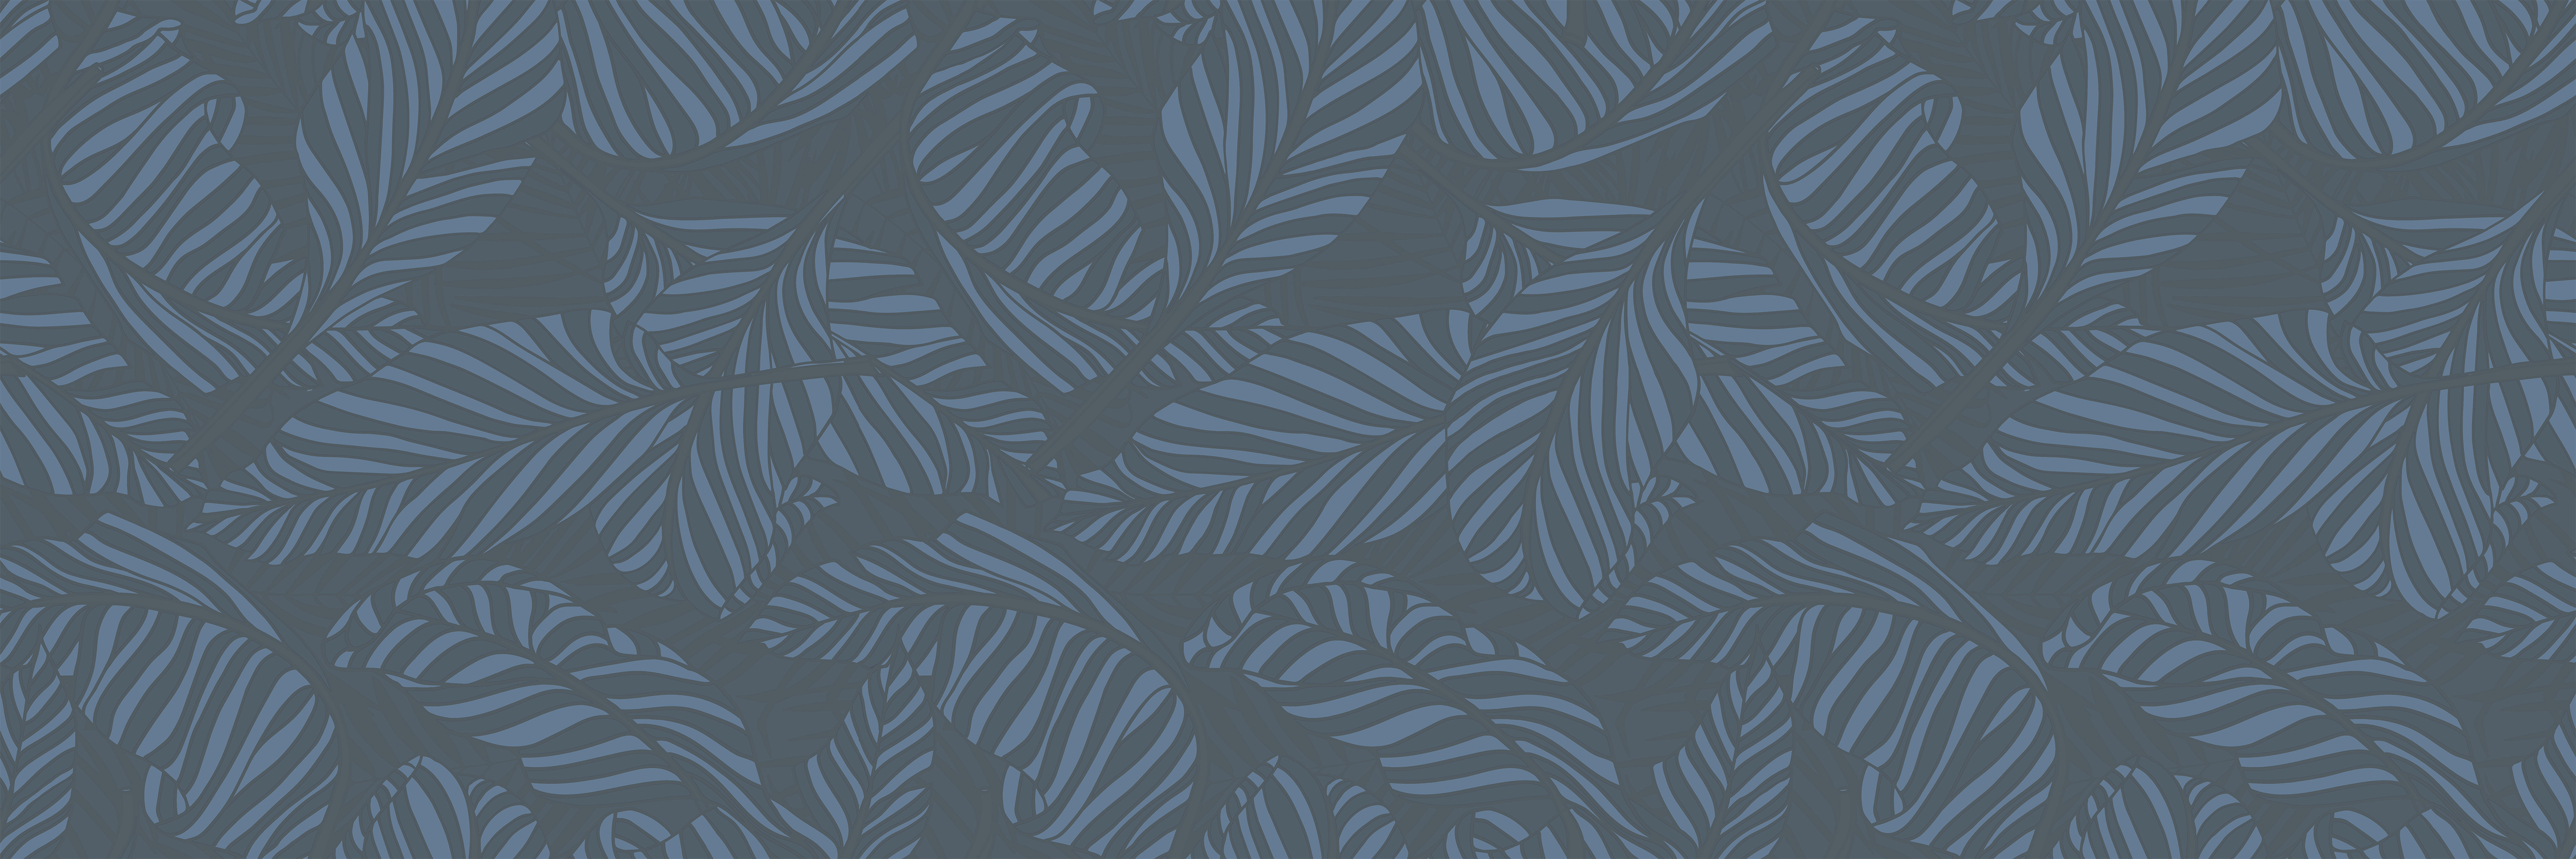 Kapalua 12x36 Blue Palm Leaf Pattern Wall Tile - SAMPLES